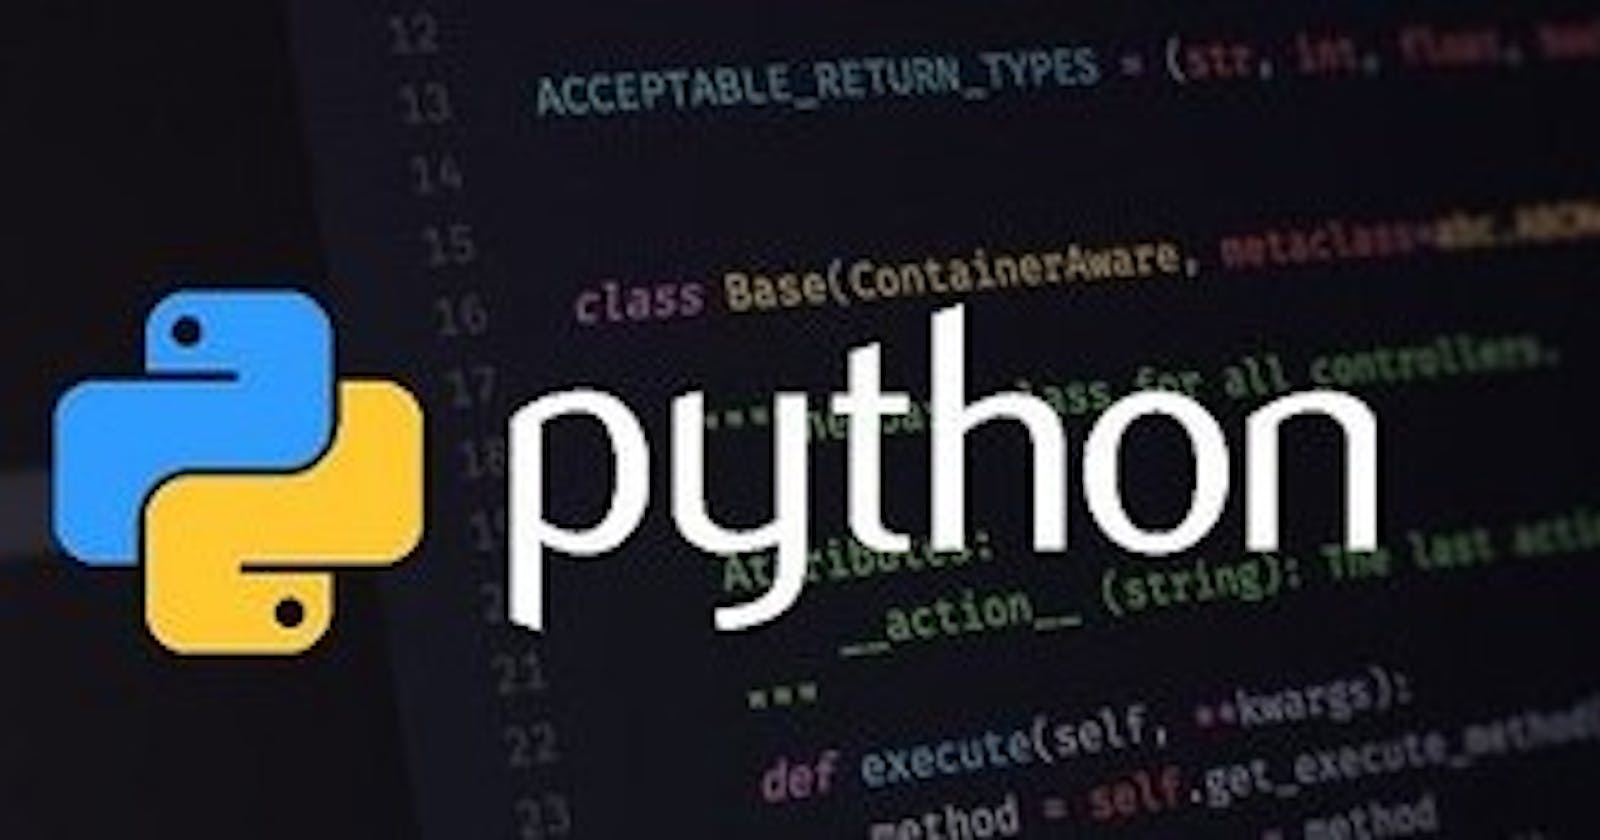 Python - An Introduction